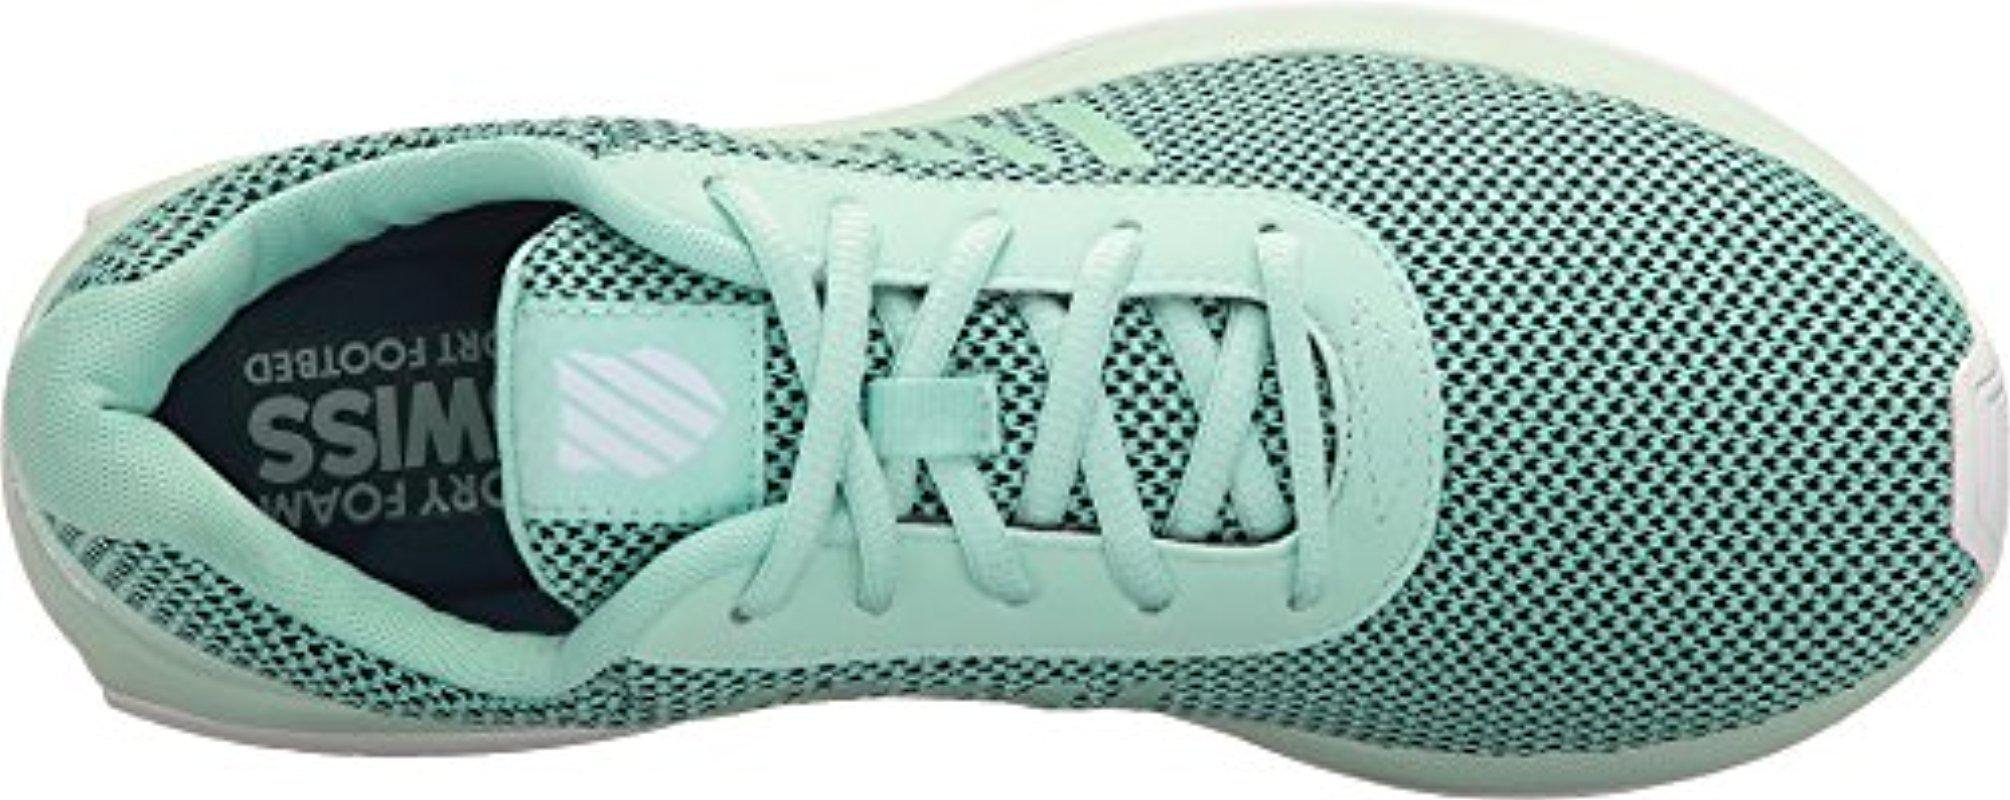 K-swiss Tubes Infinity Cmf Sneaker in Green - Save 22% | Lyst